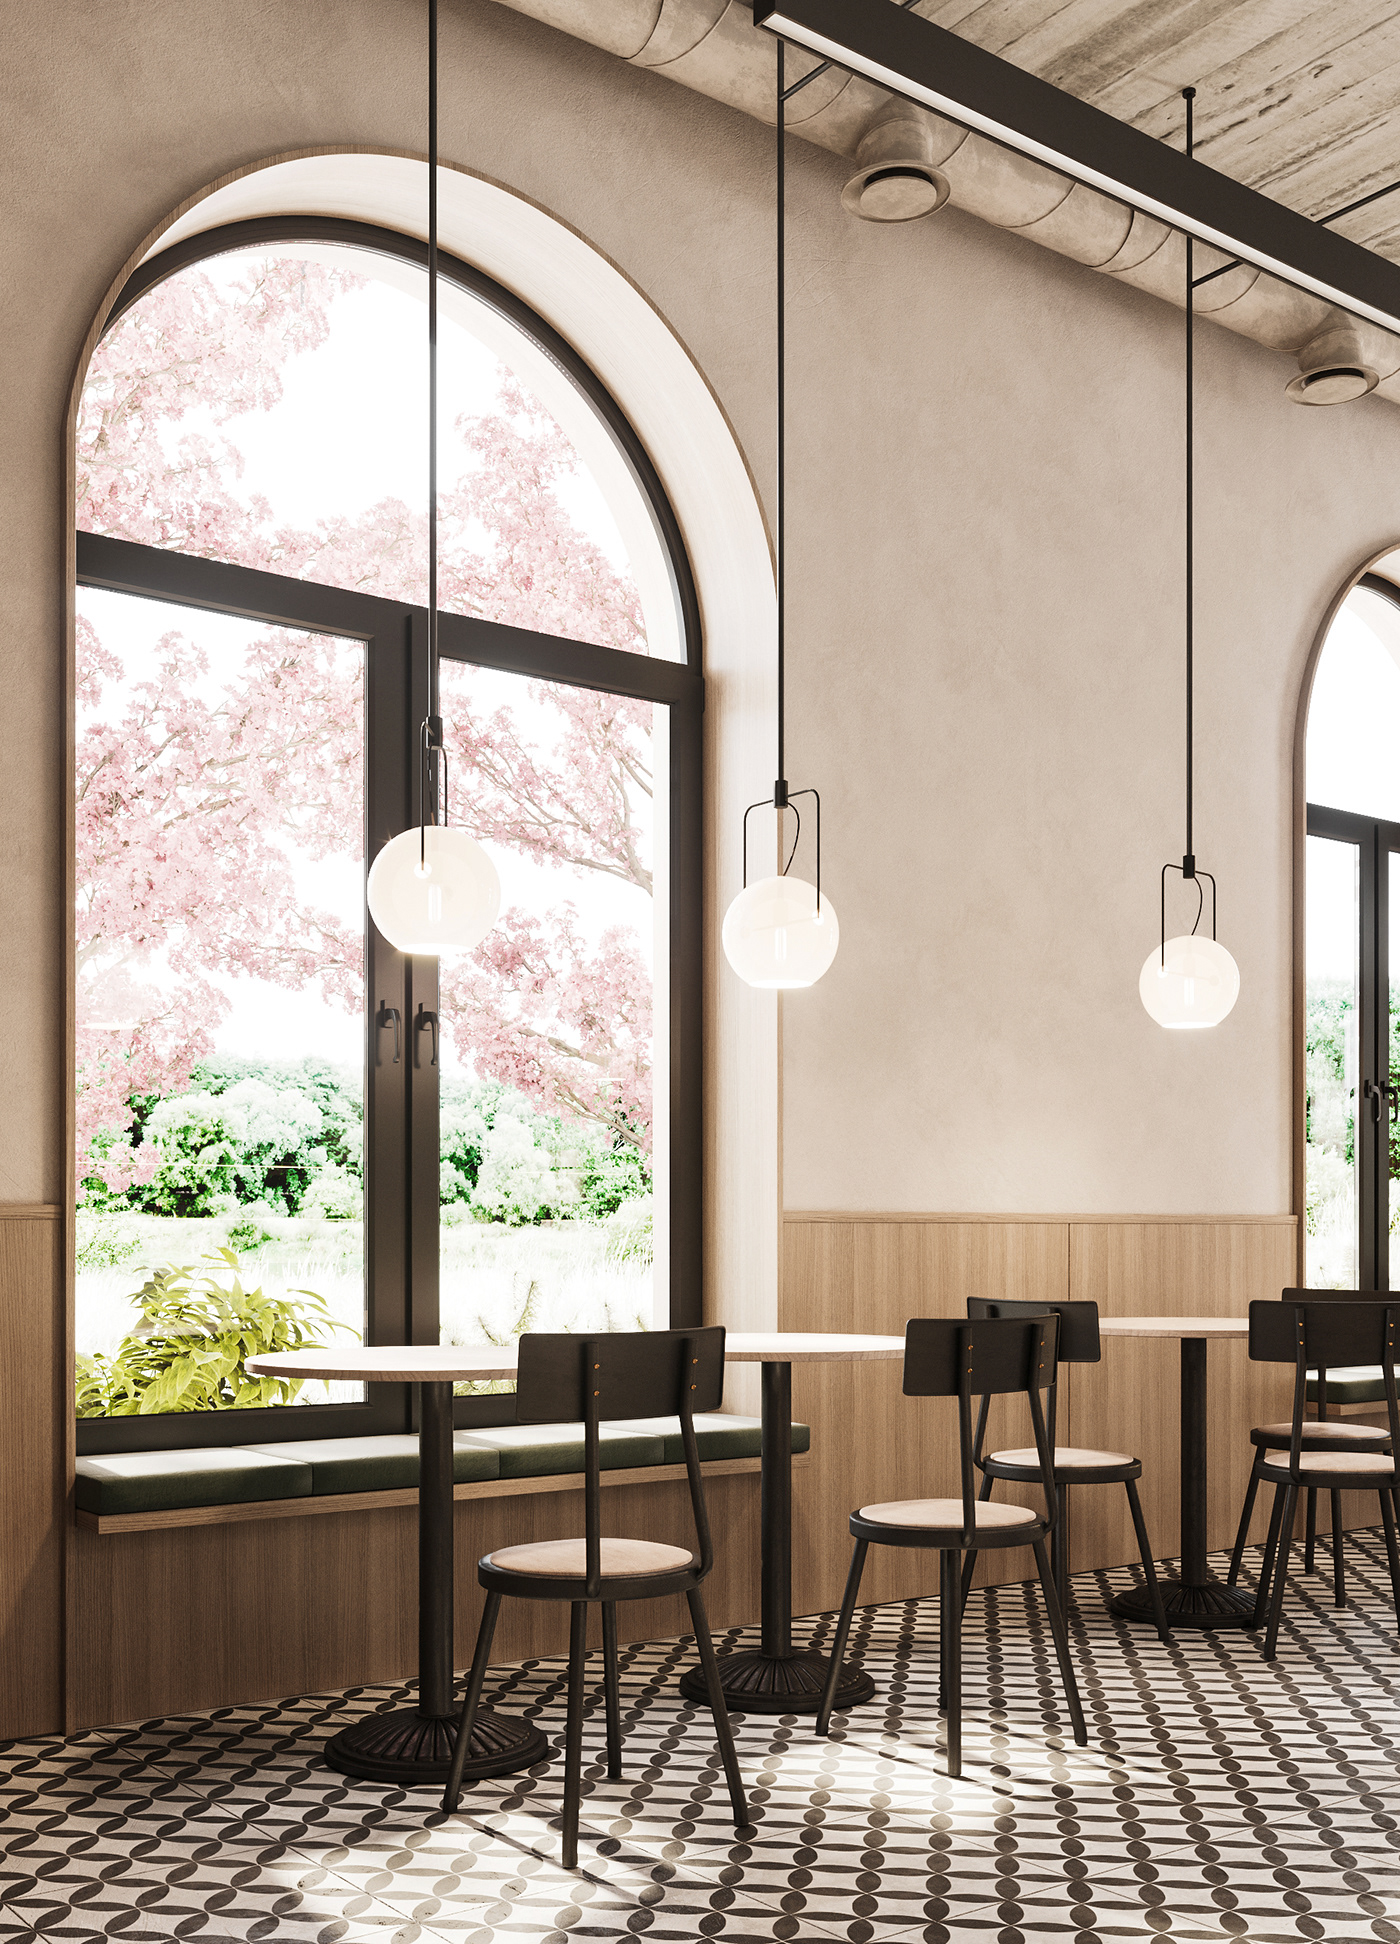 3ds max bakery design  corona renderer design interior design  Kafe modern soft interior visualization